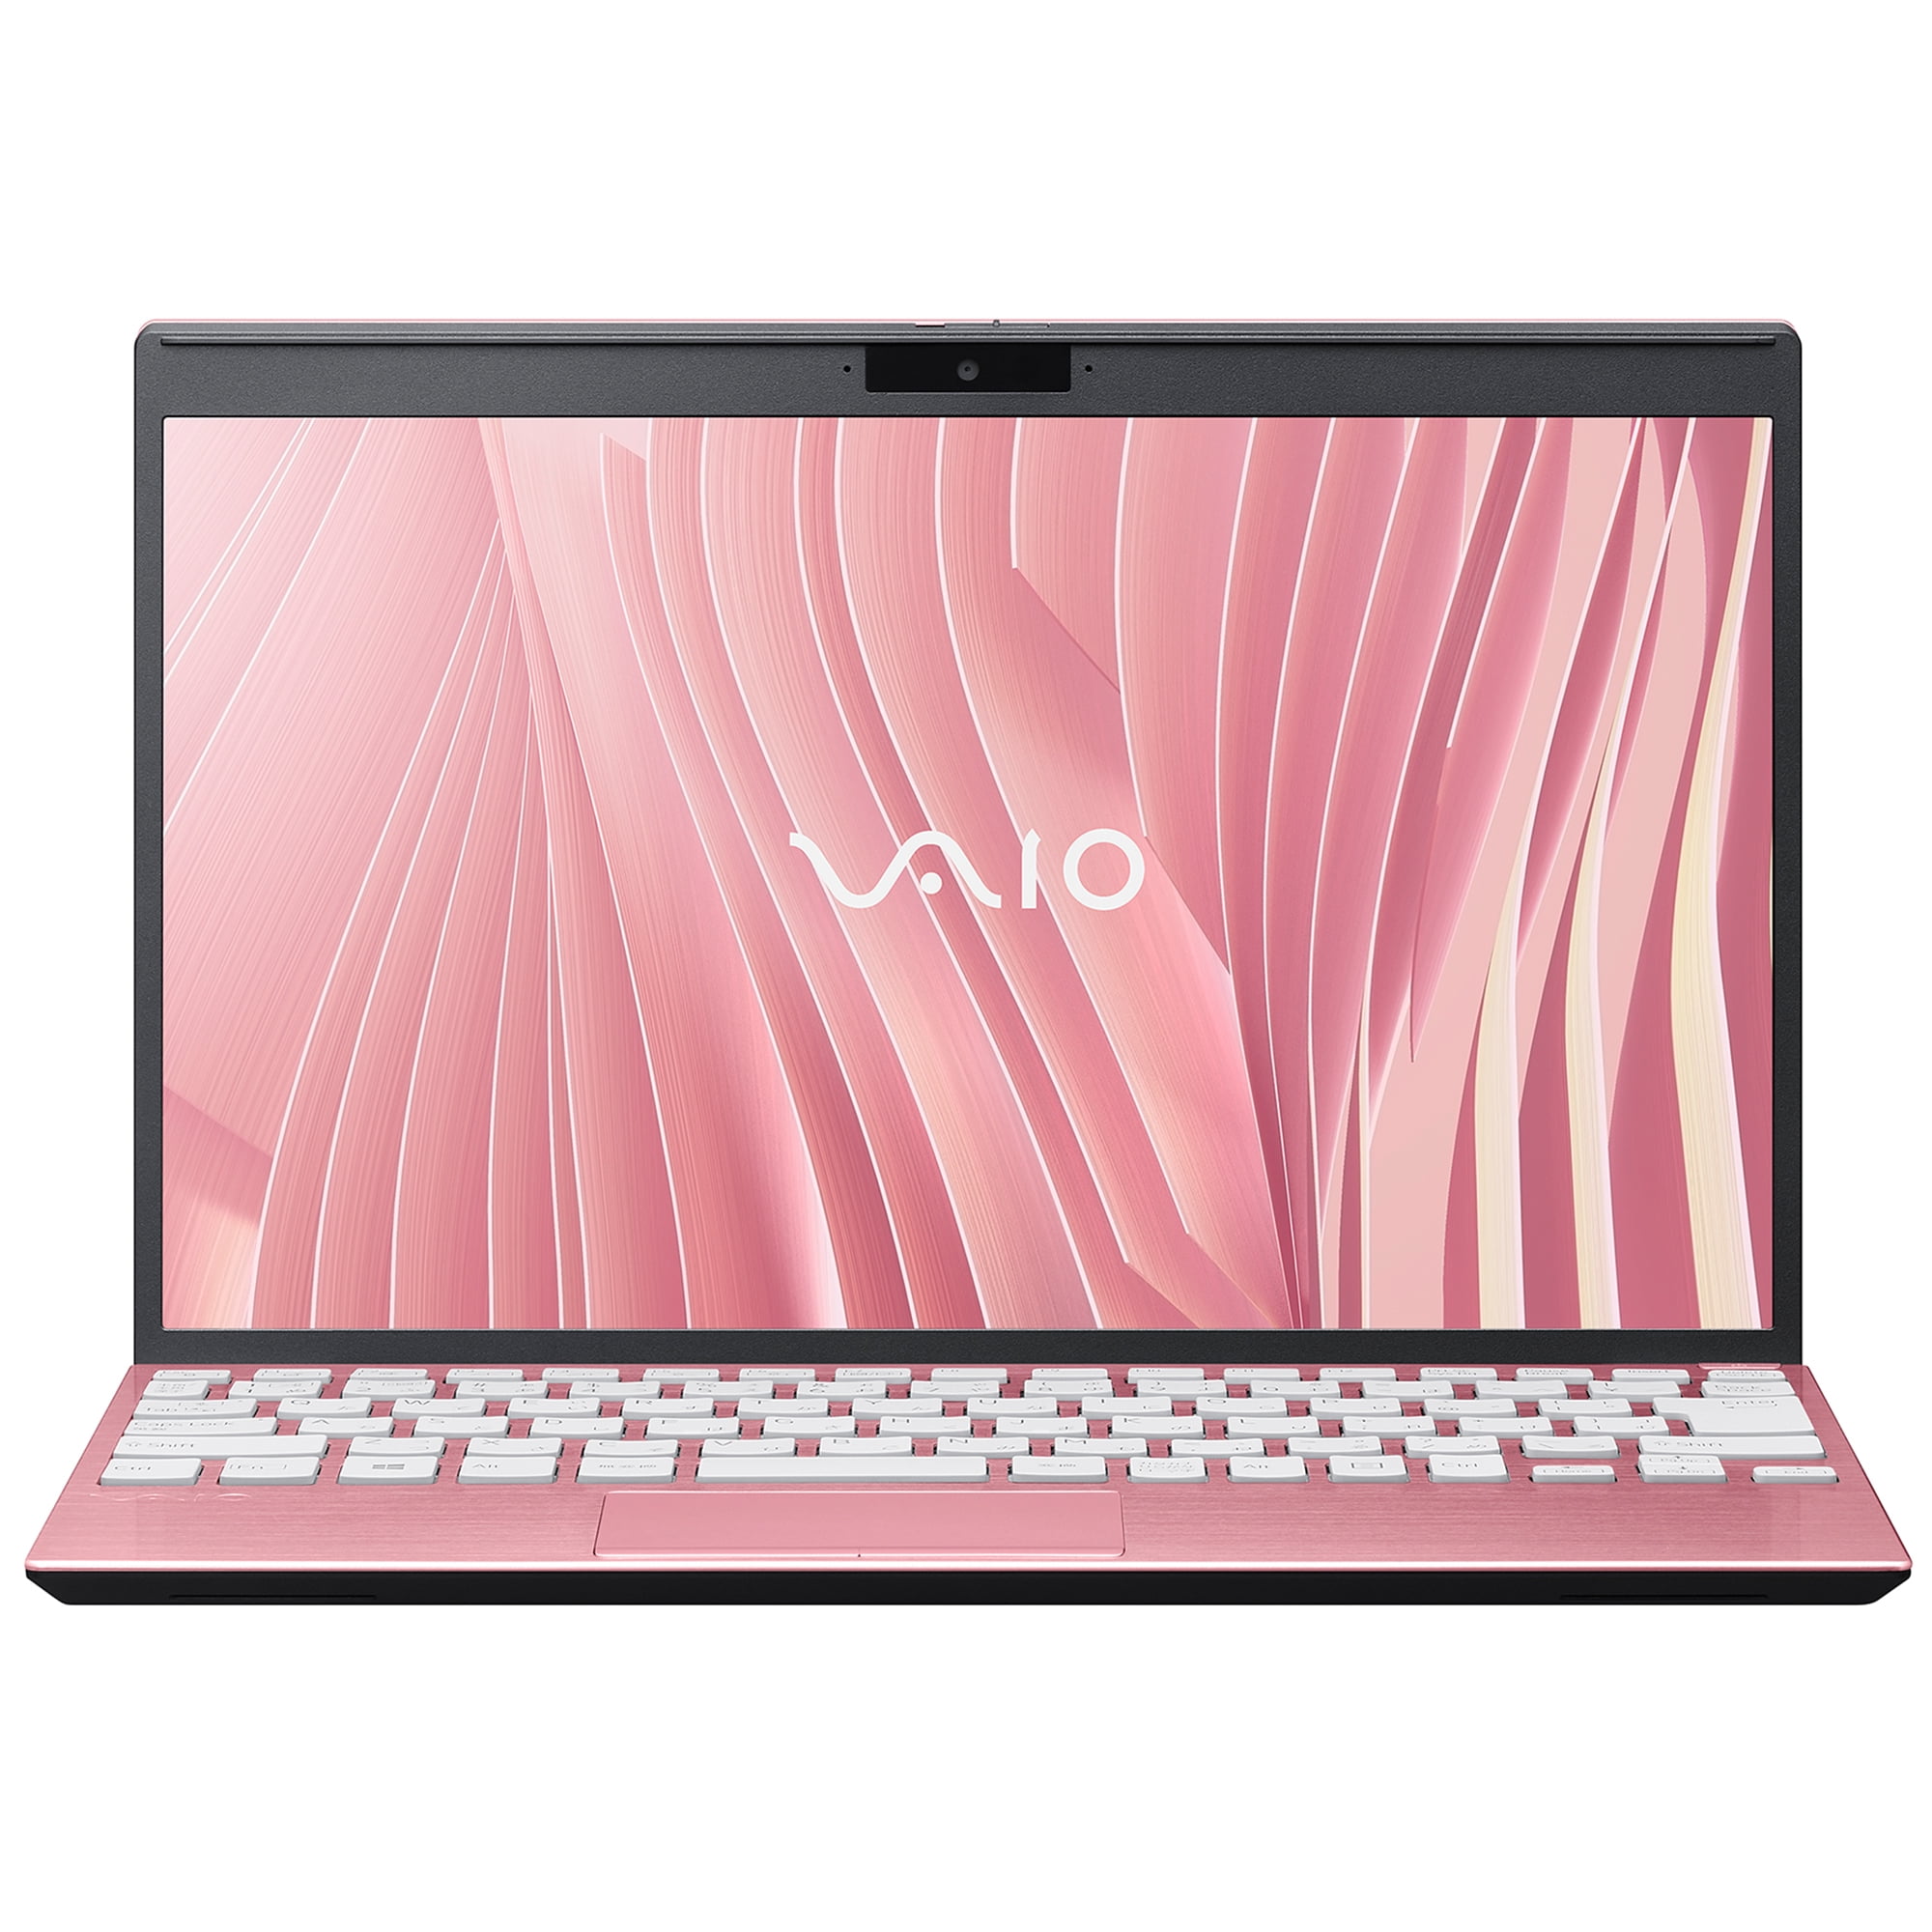 Shining Stranden Forgænger VAIO SX12 Laptop - Intel Core i5-1240P | 16GB Memory (RAM) | 512GB PCIe SSD  | Windows 11 Pro | 12.5" FHD (1920 x 1080) Non-touchscreen | Rose Gold |  Made in Japan - Walmart.com